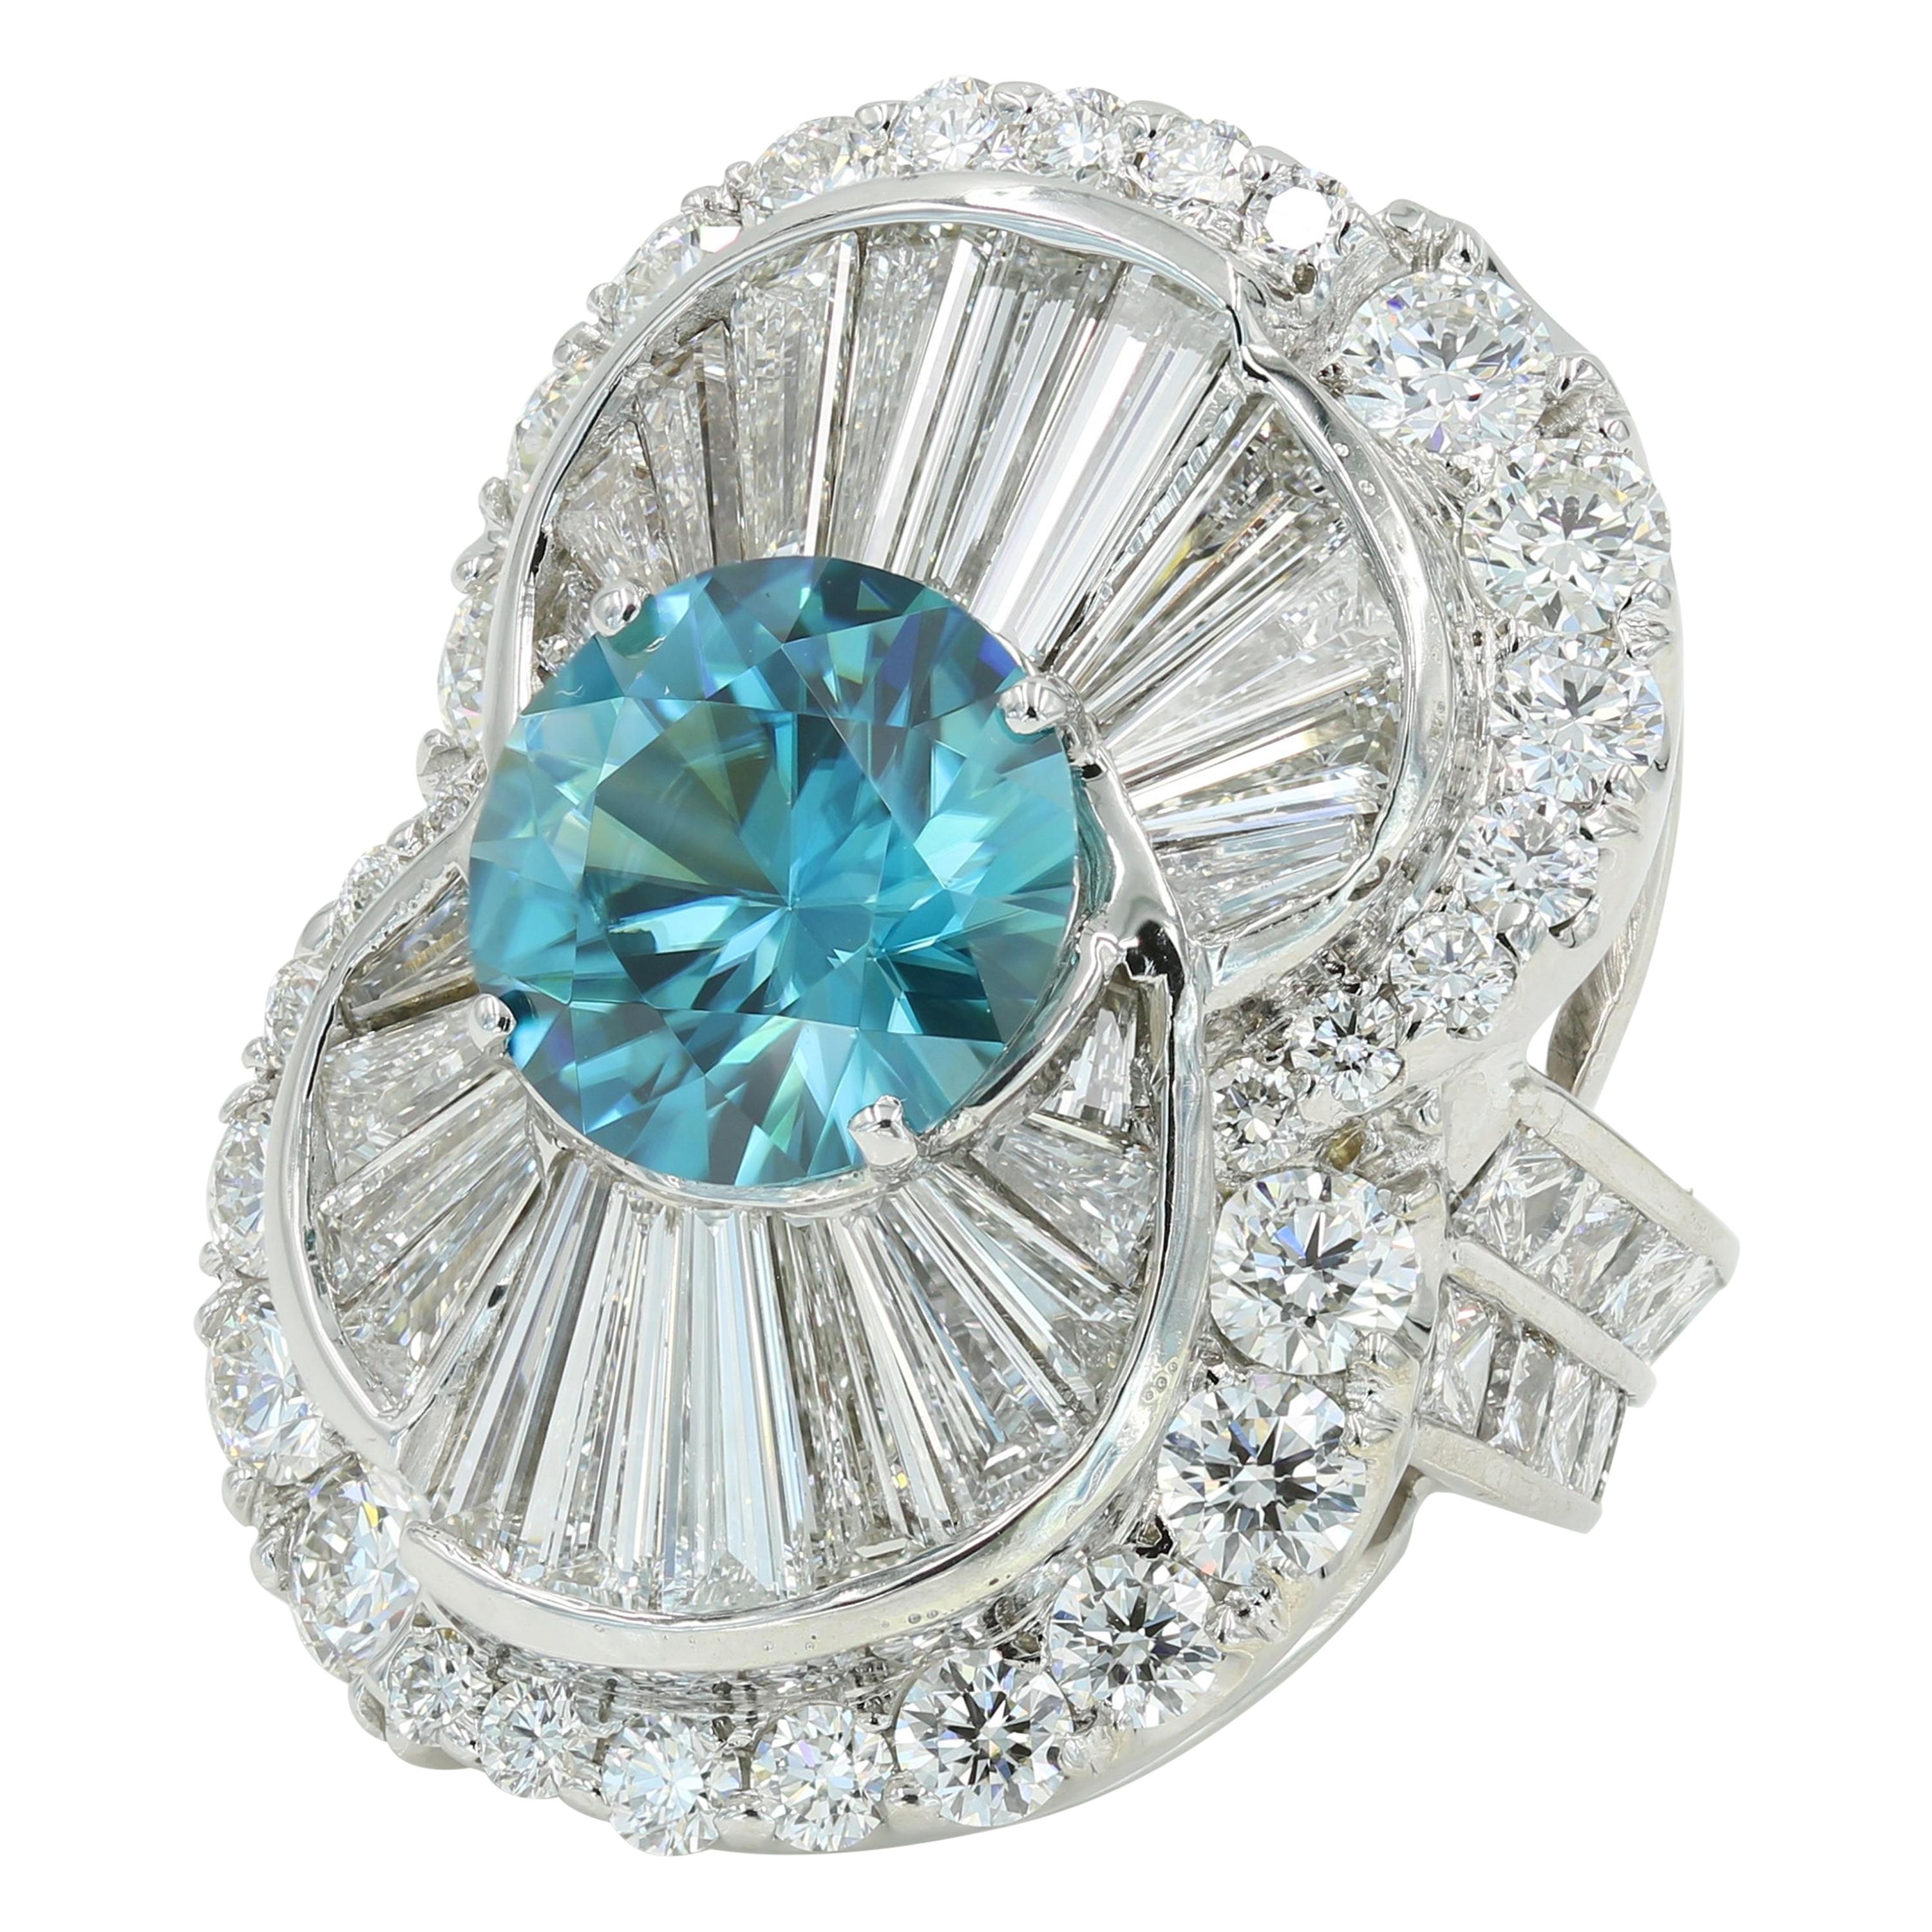 6.92cts Blue Zircon Lester Lampert Original Baguette, Prince & Rd Diamond Ring For Sale